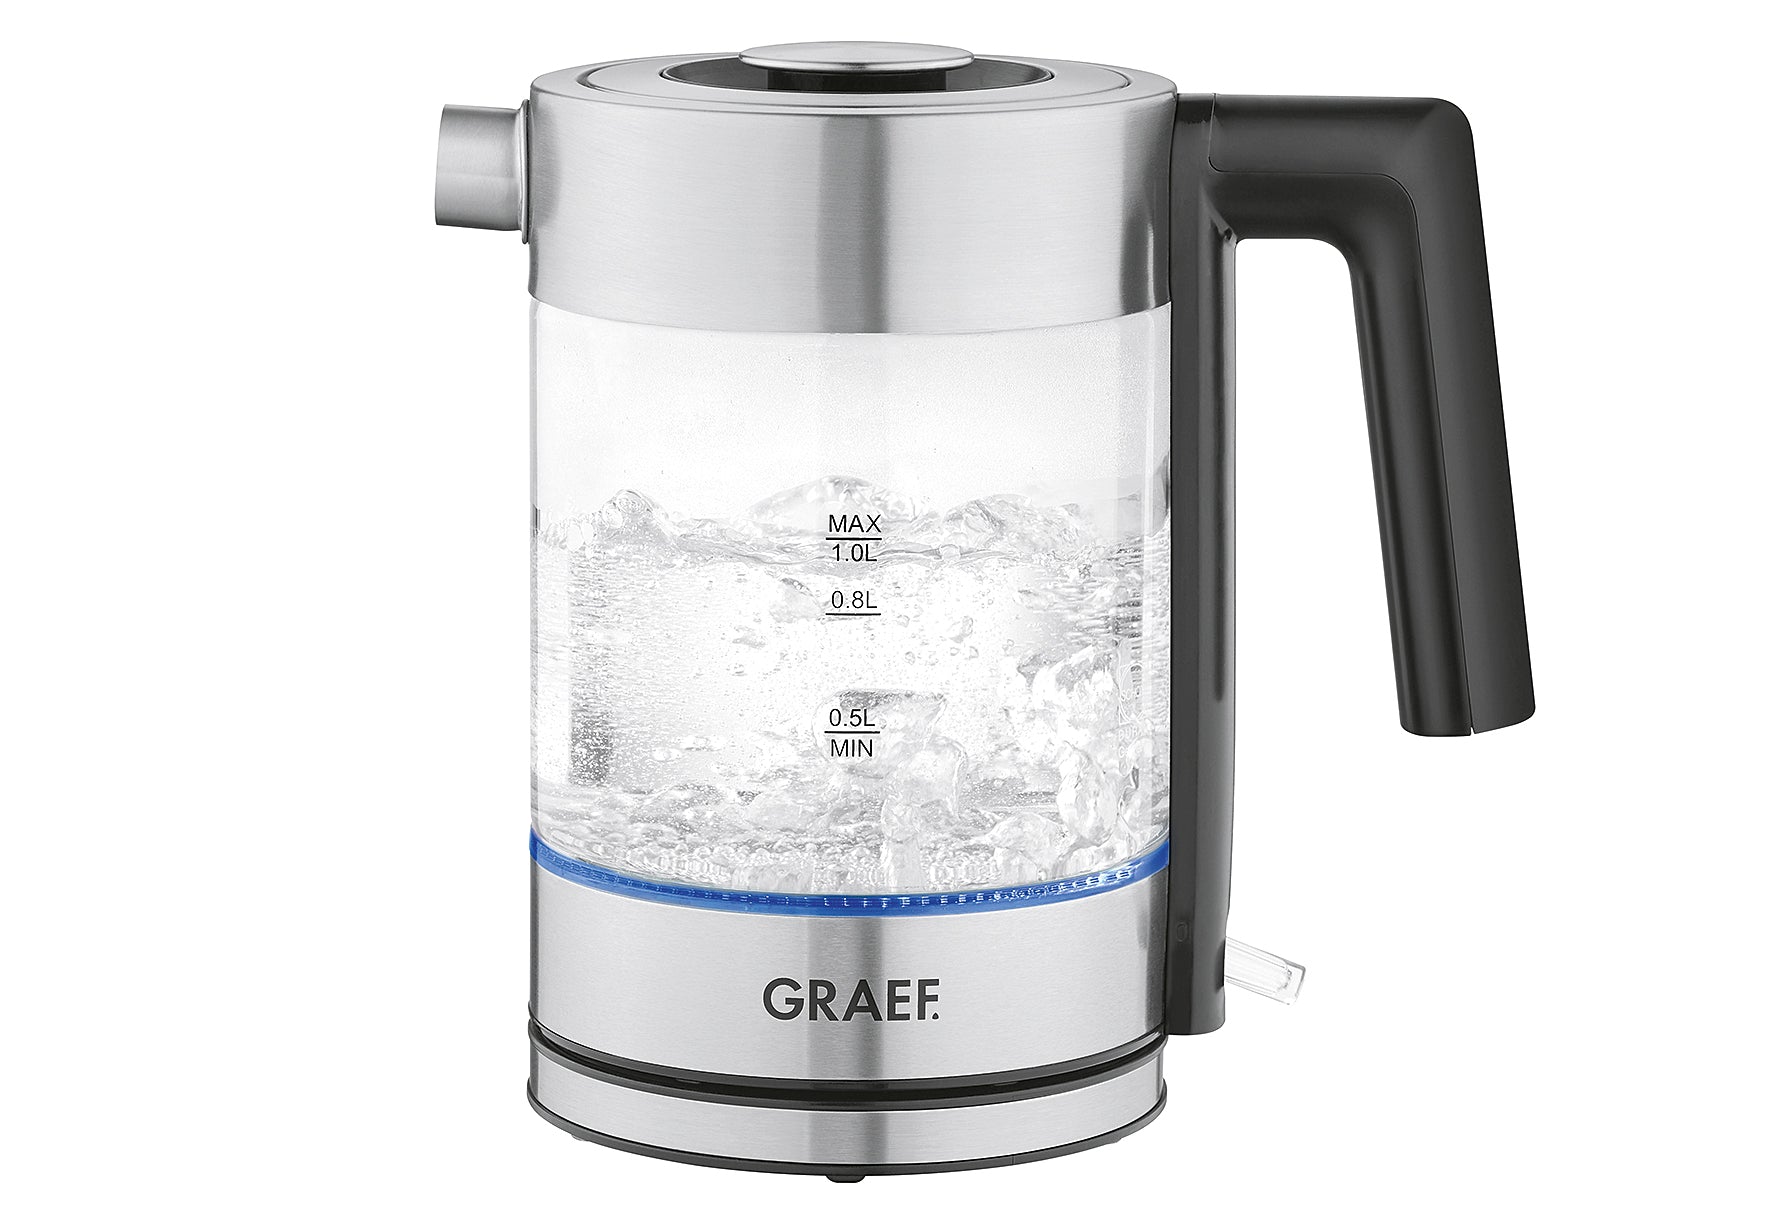 GRAEF Wasserkocher WK 300 EU 1l 2200Watt Glas